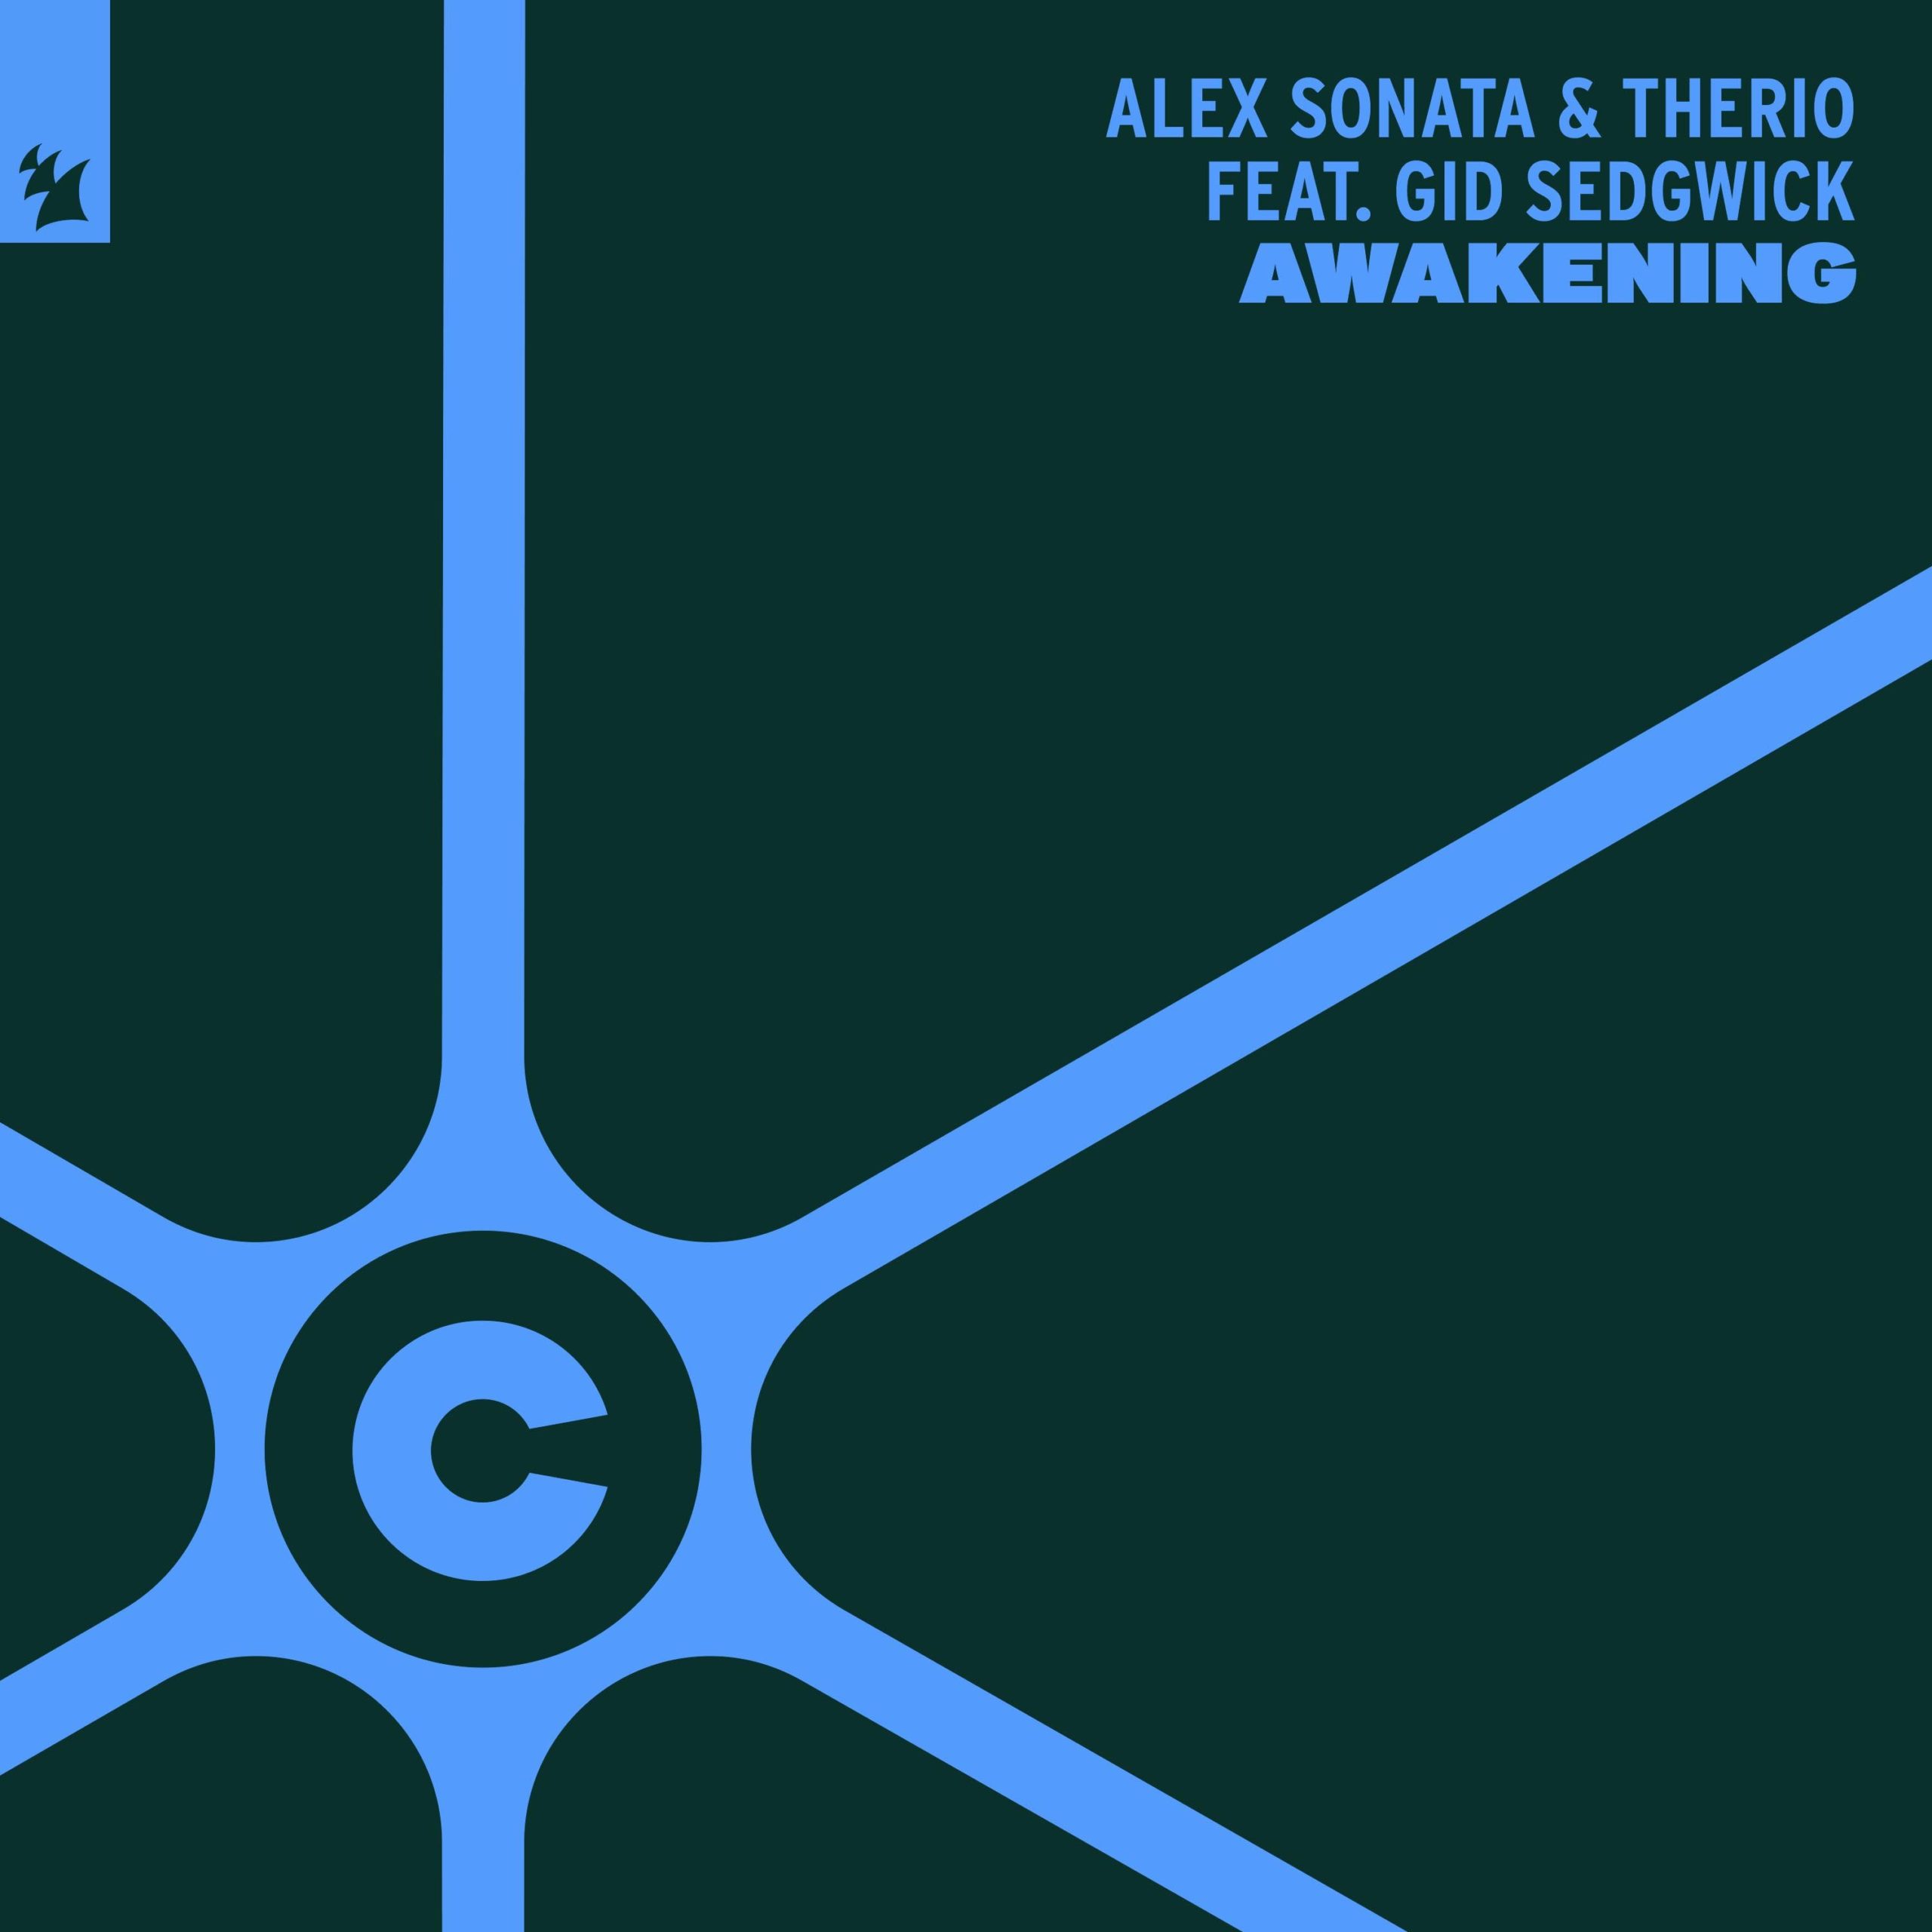 Alex Sonata and The Rio feat. Gid Segwick presents Awakening on Captivating